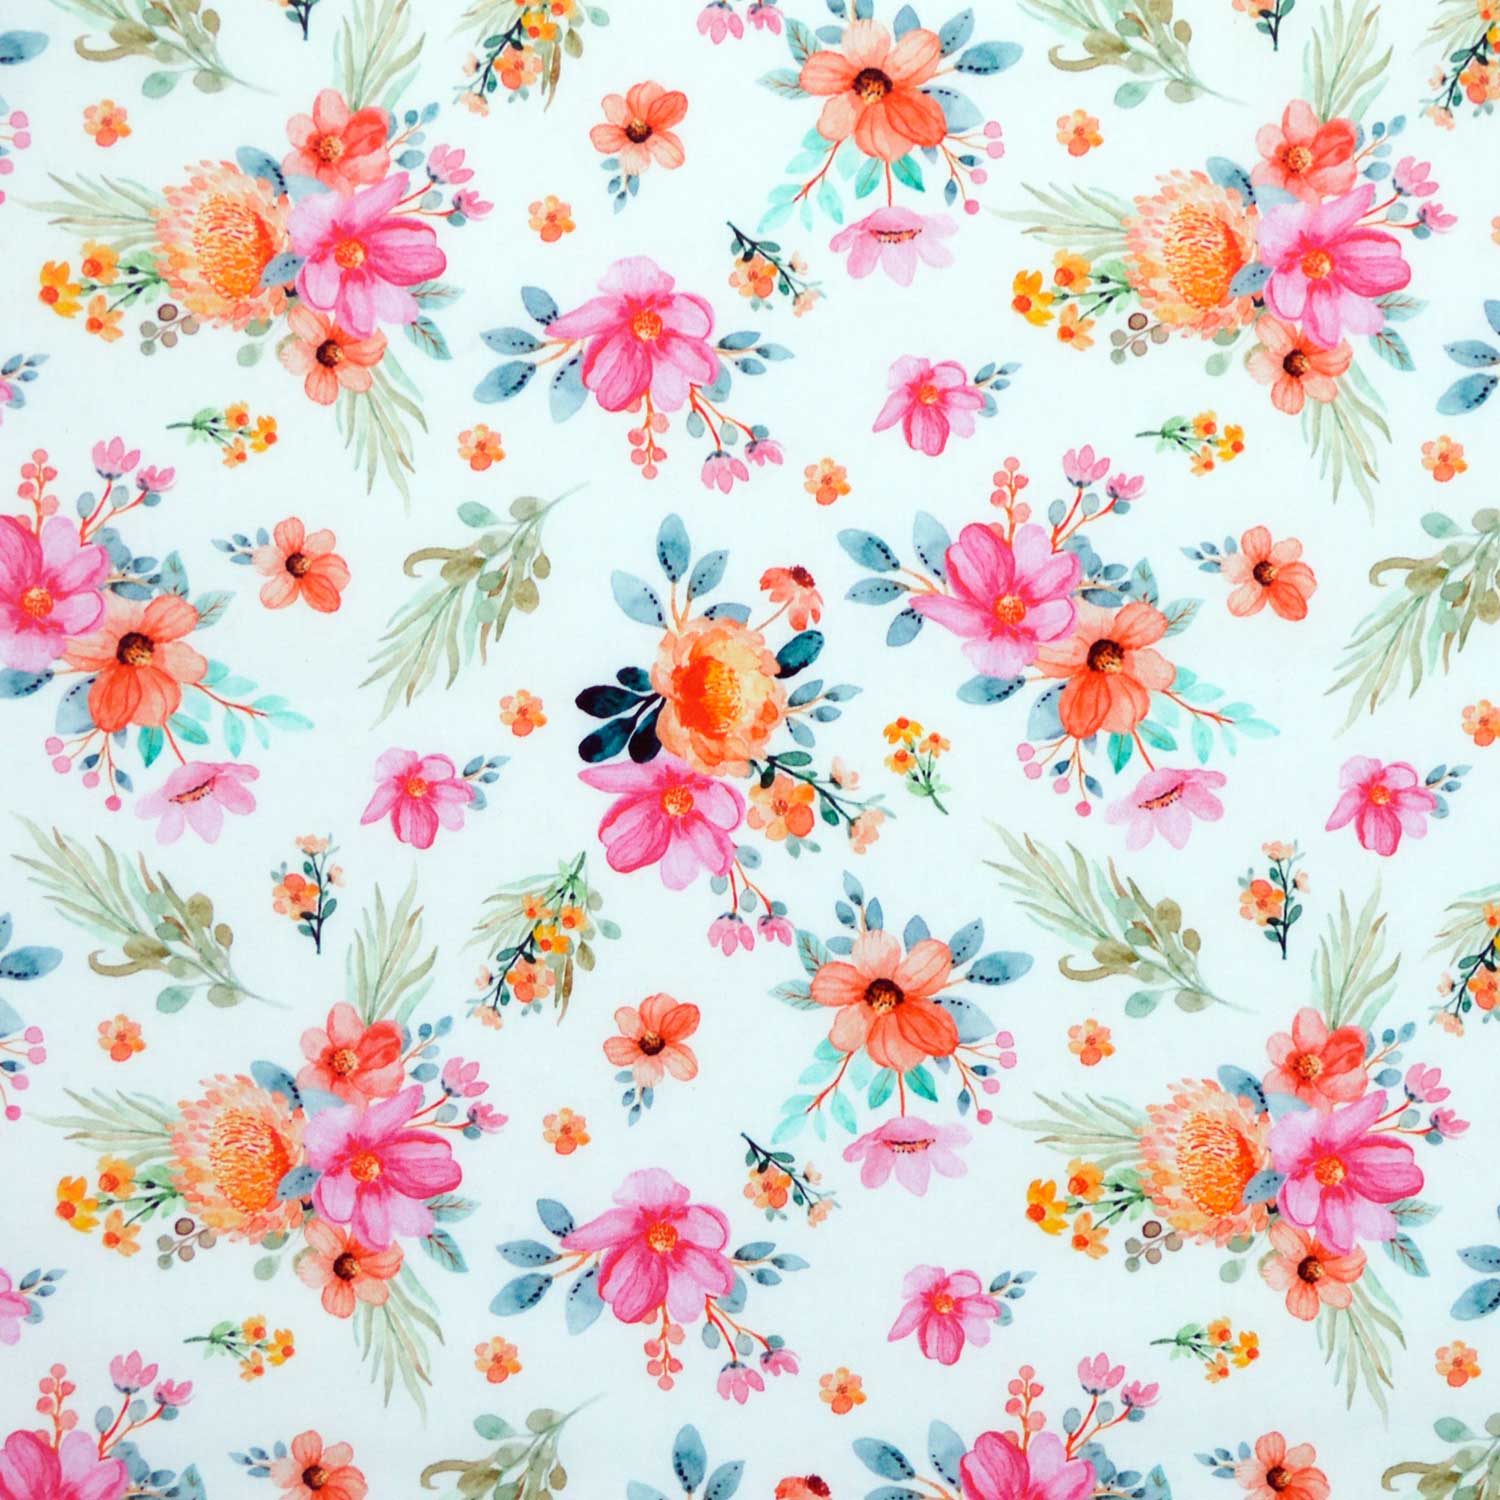 tecido-tricoline-estampado-digital-floral-primavera-della-aviamentos-tecidos-caldeira-capa-11051